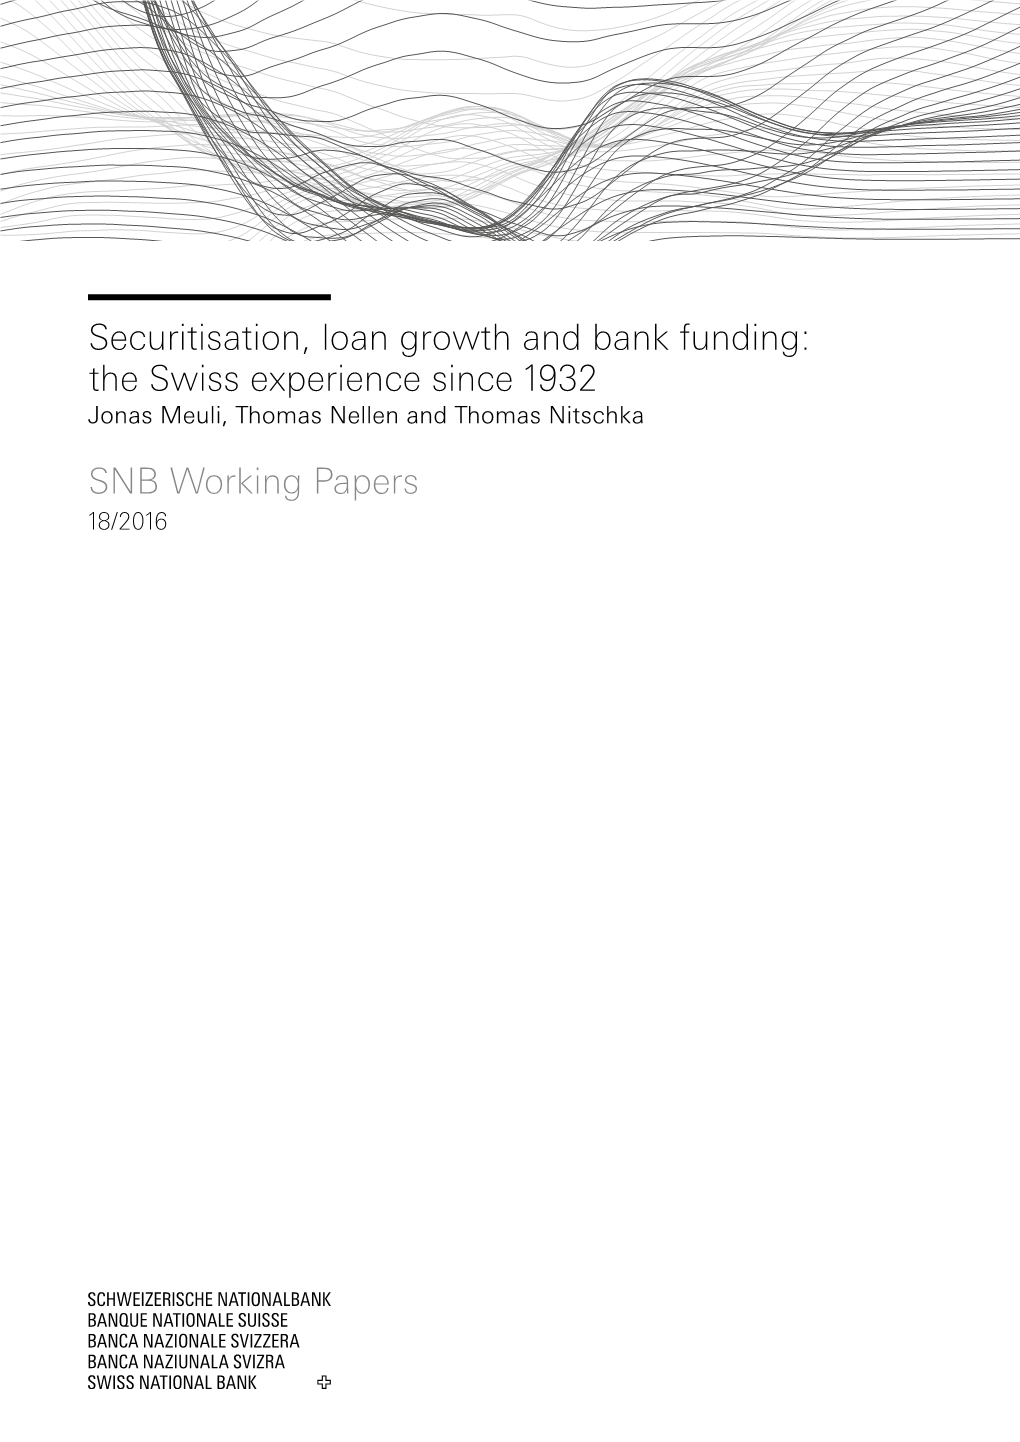 Securitisation, Loan Growth and Bank Funding: the Swiss Experience Since 1932 Jonas Meuli, Thomas Nellen and Thomas Nitschka